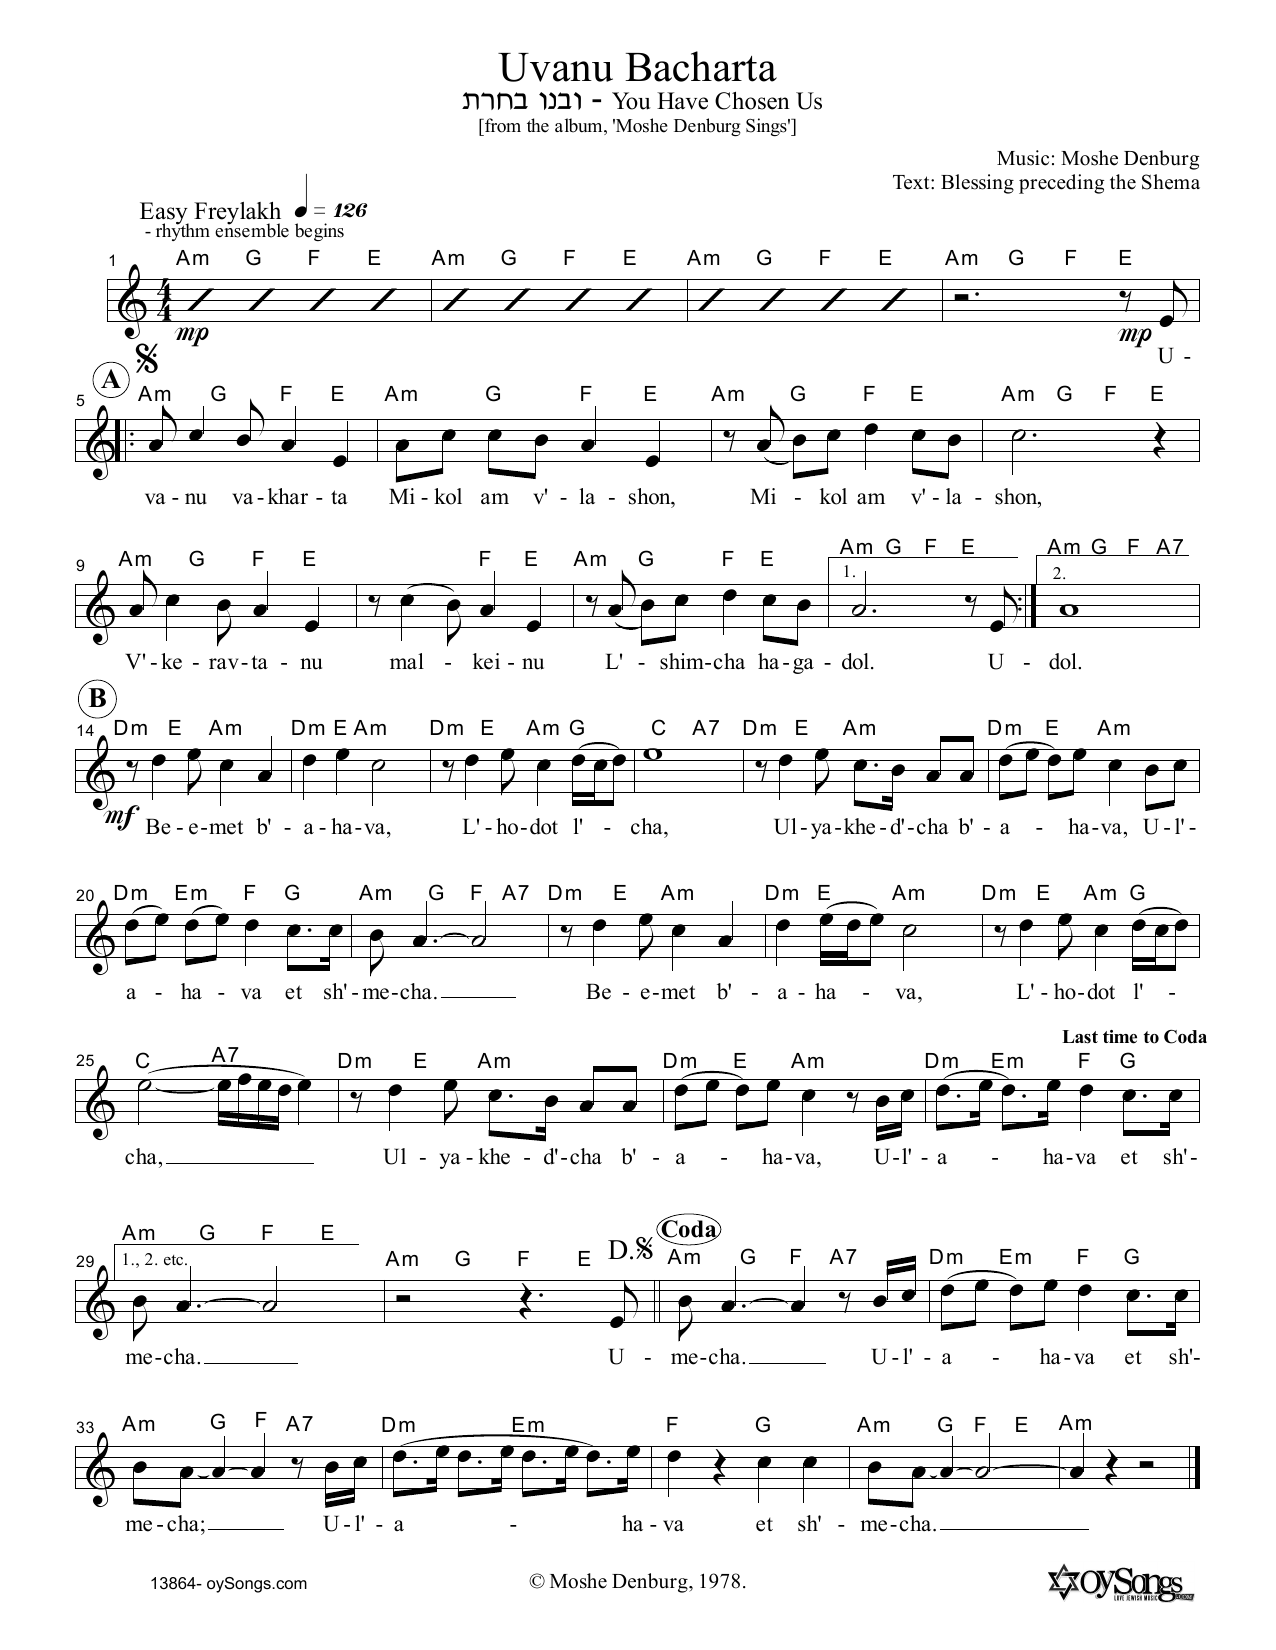 Moshe Denburg Uvanu Bacharta Sheet Music Notes & Chords for Melody Line, Lyrics & Chords - Download or Print PDF